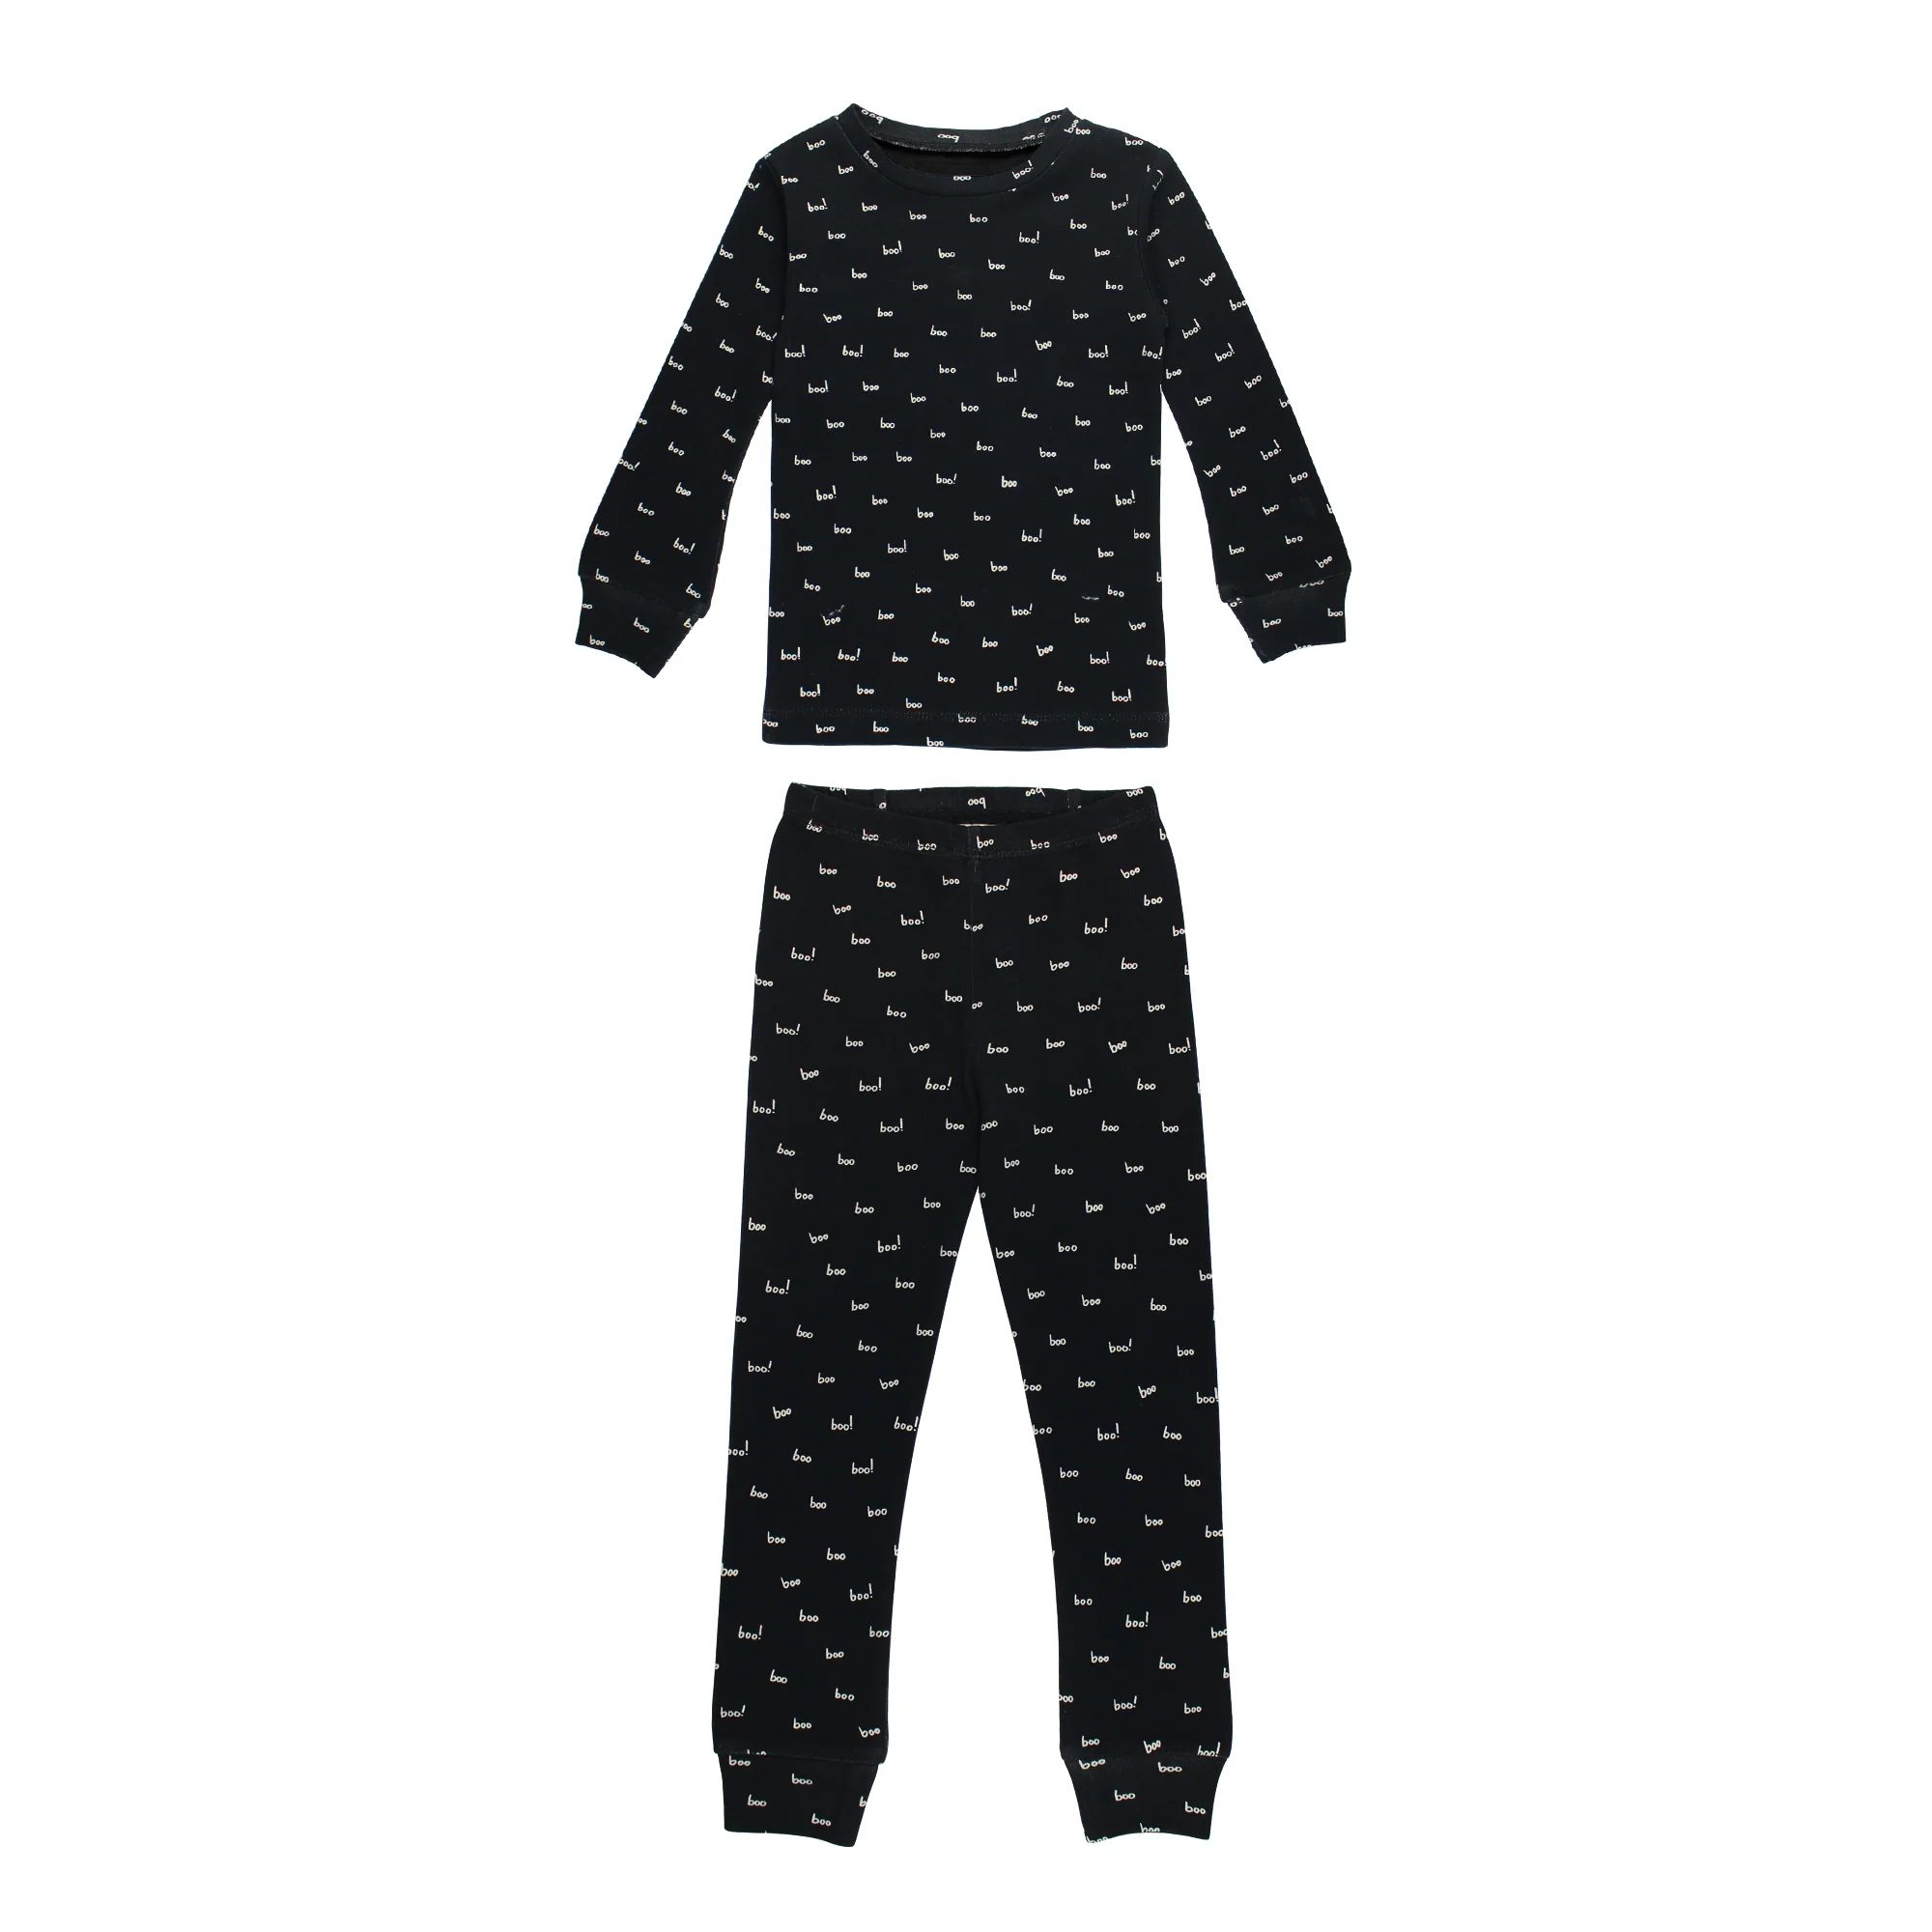 Kids' Organic L/Sleeve PJ Set in Boo | L'ovedbaby